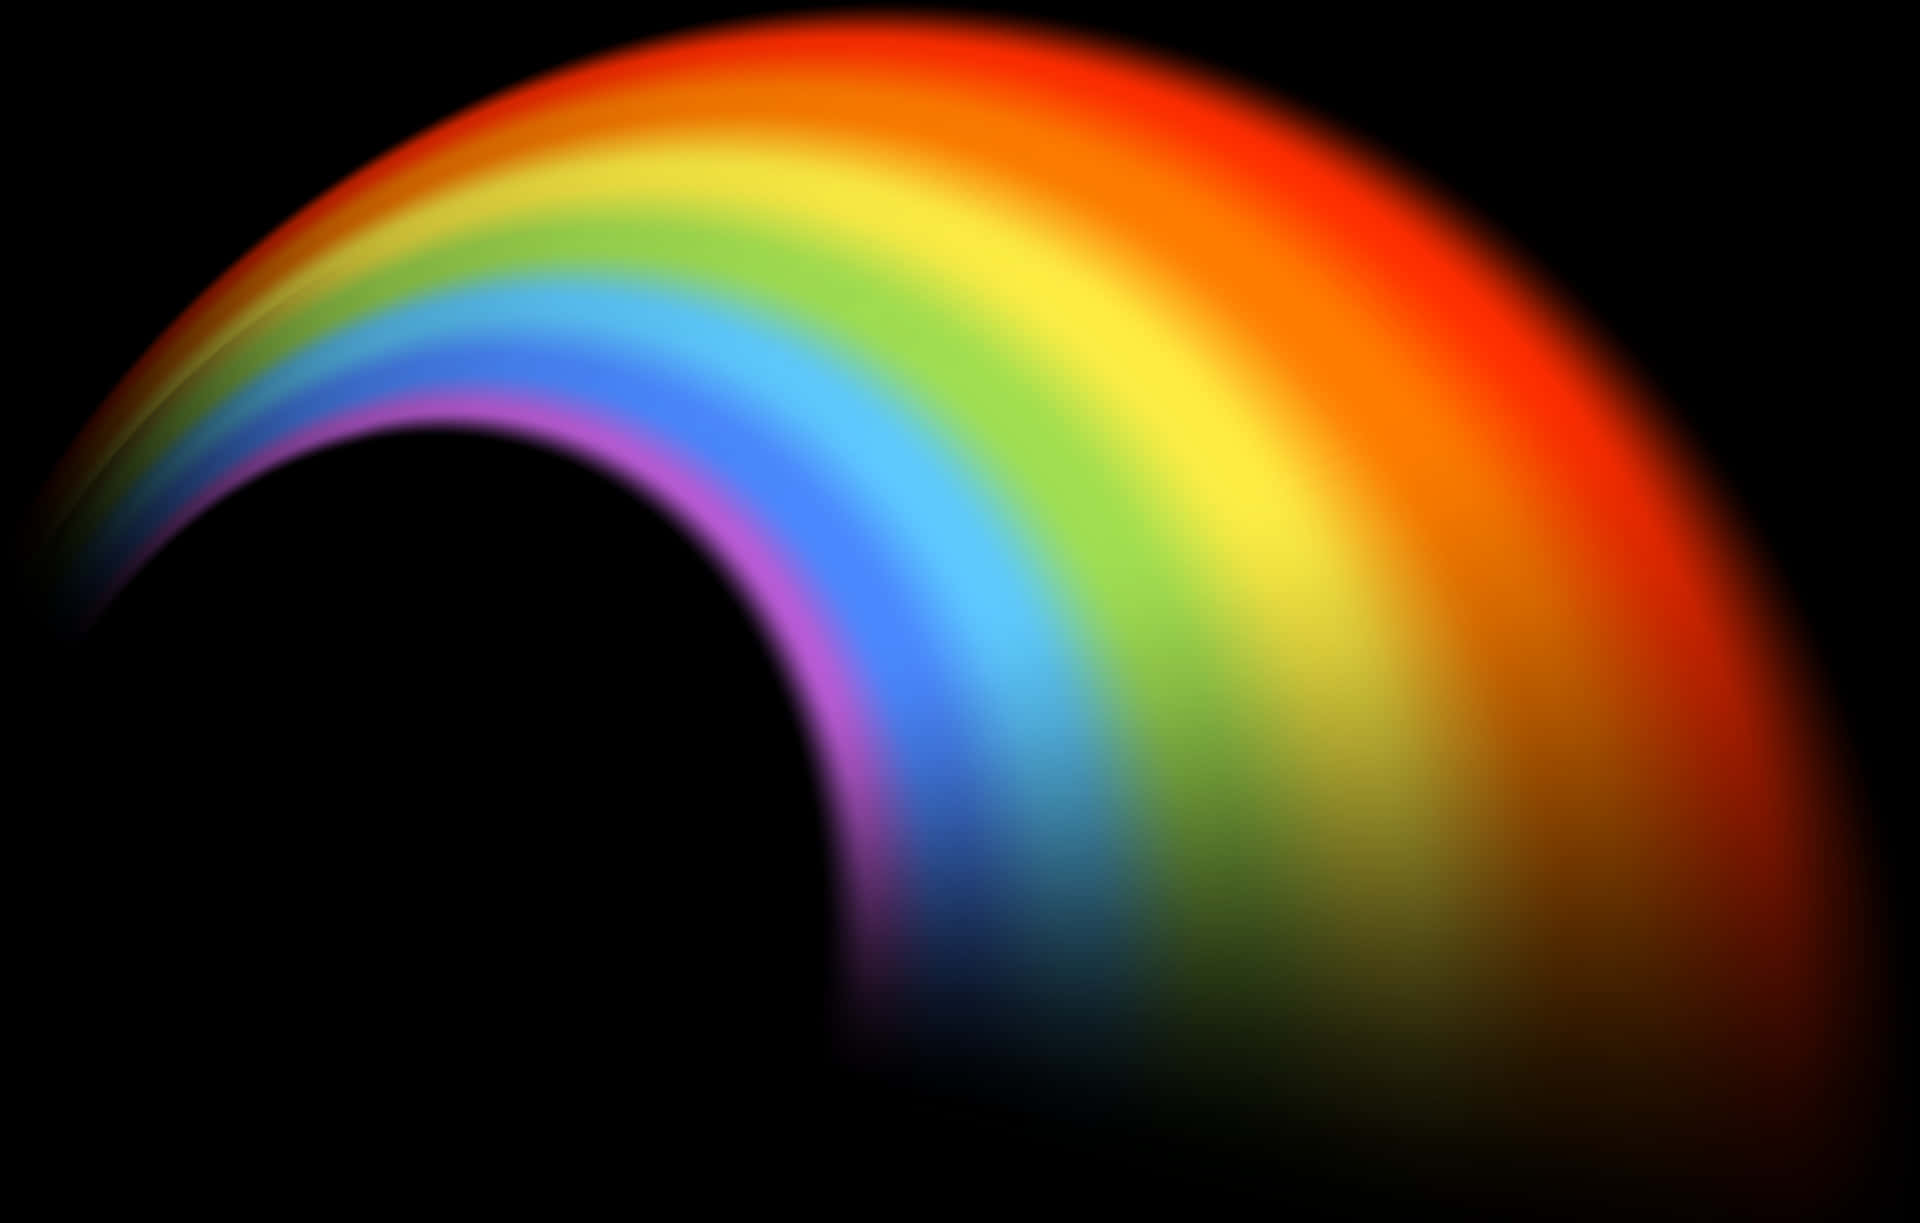 Vibrant Rainbow Arc Black Background PNG image